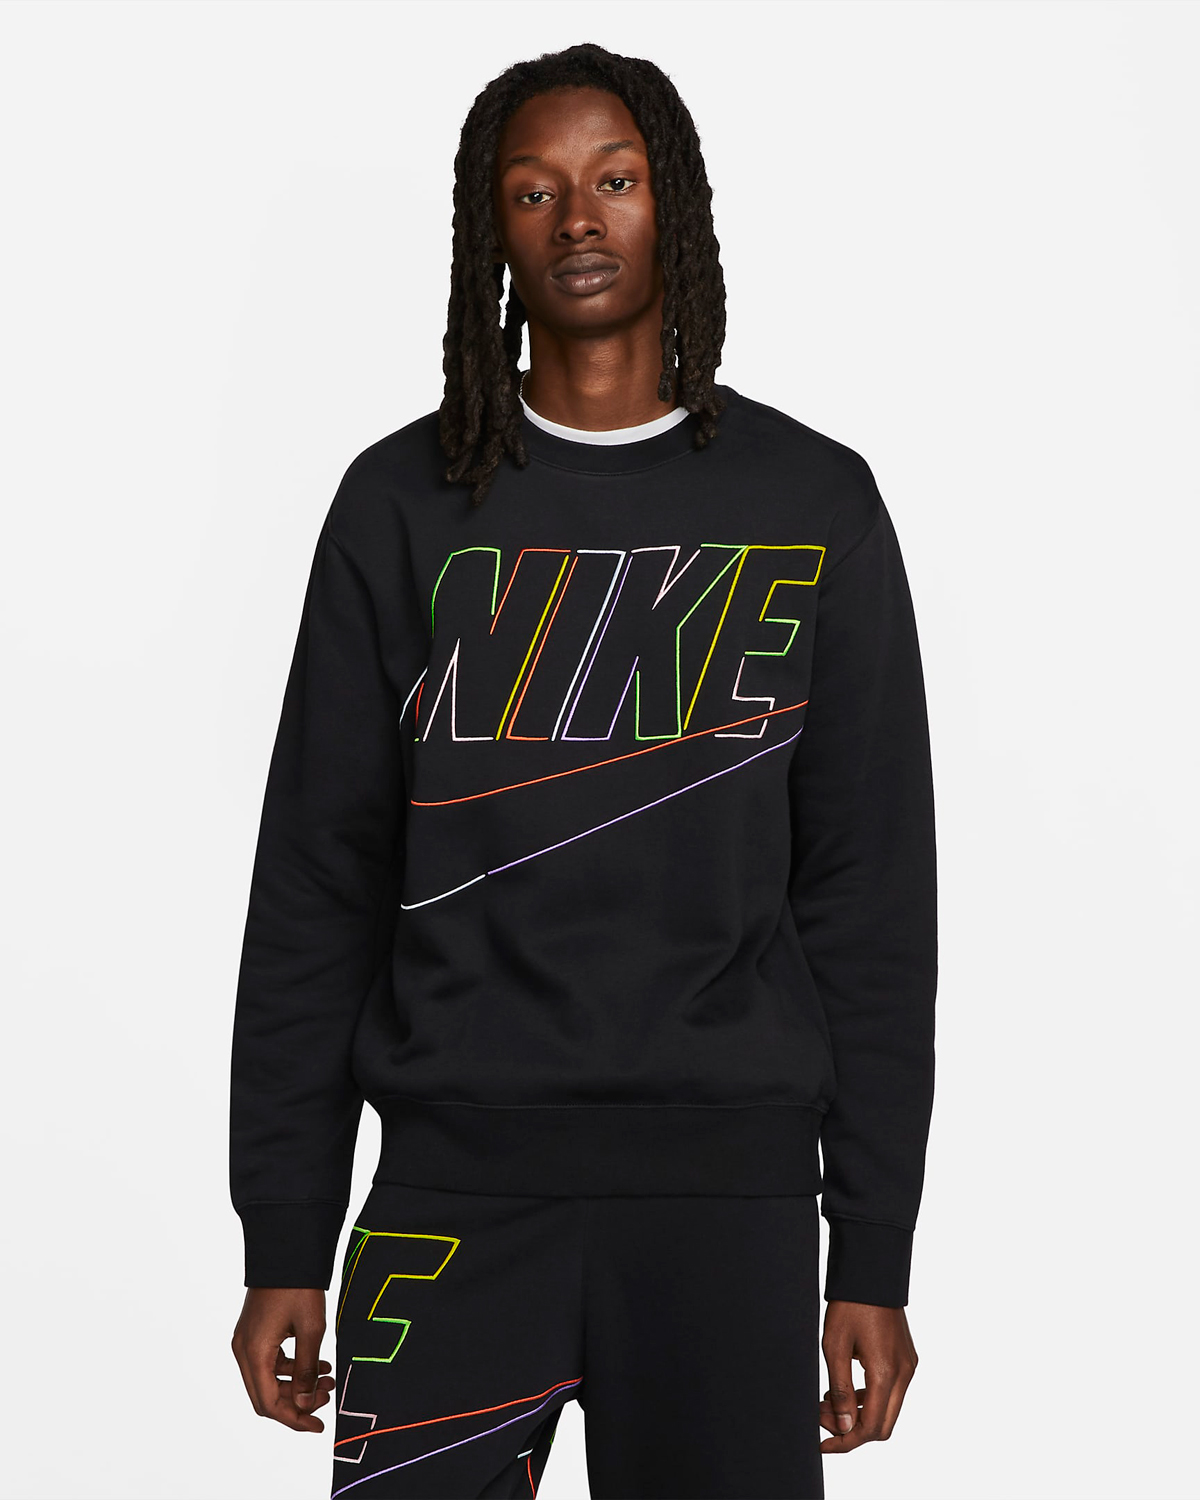 Nike-Club-Fleece-Crew-Sweatshirt-Black-Multi-Color